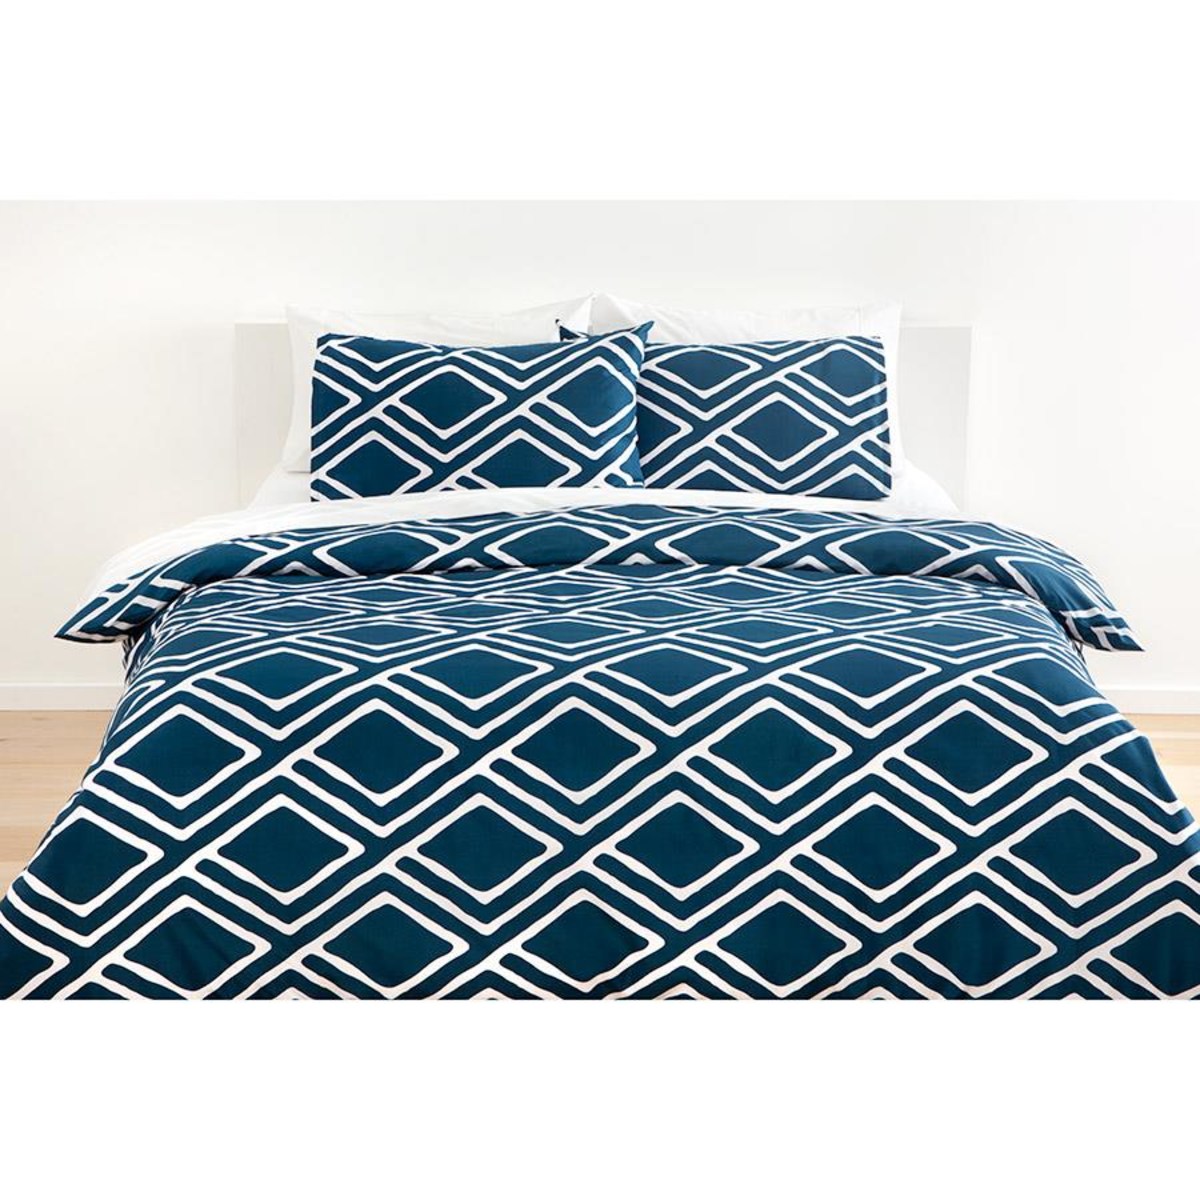 Lexi Quilt Cover Set - Double Bed